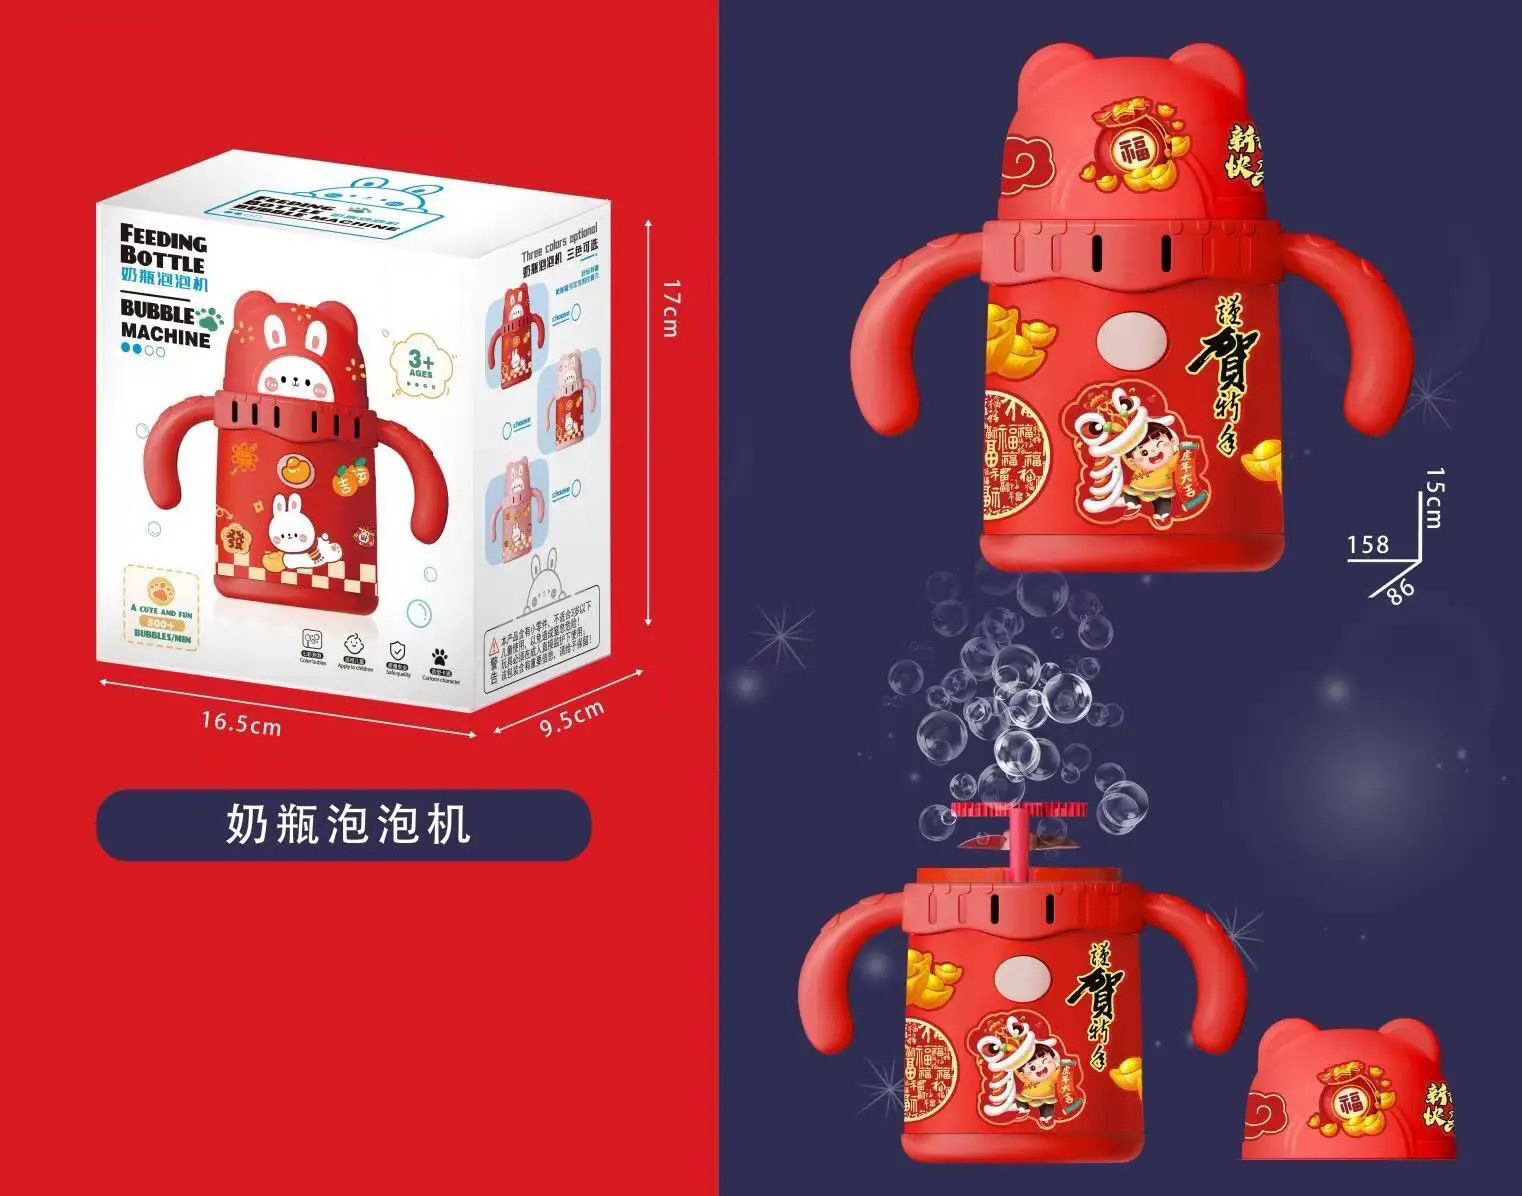 New Product Cans Bubble Machine Children's Electric Feeding Bottle Bubble Machine Toys